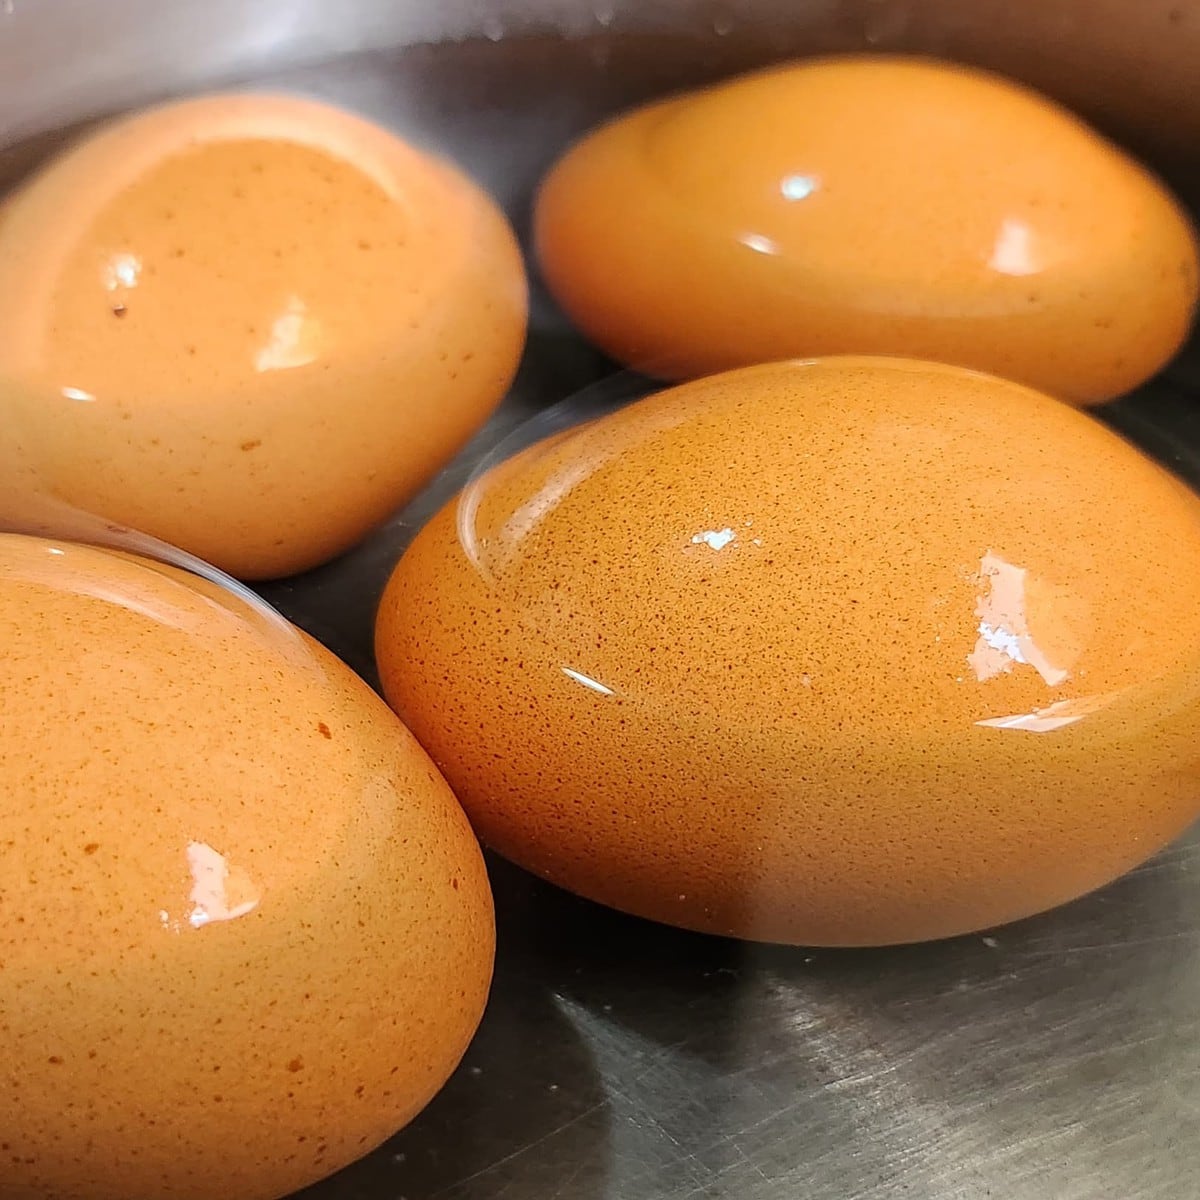 Máquina Para Fabricar Huevos Cocidos Sin Cáscara De Cocina C Color Rojo